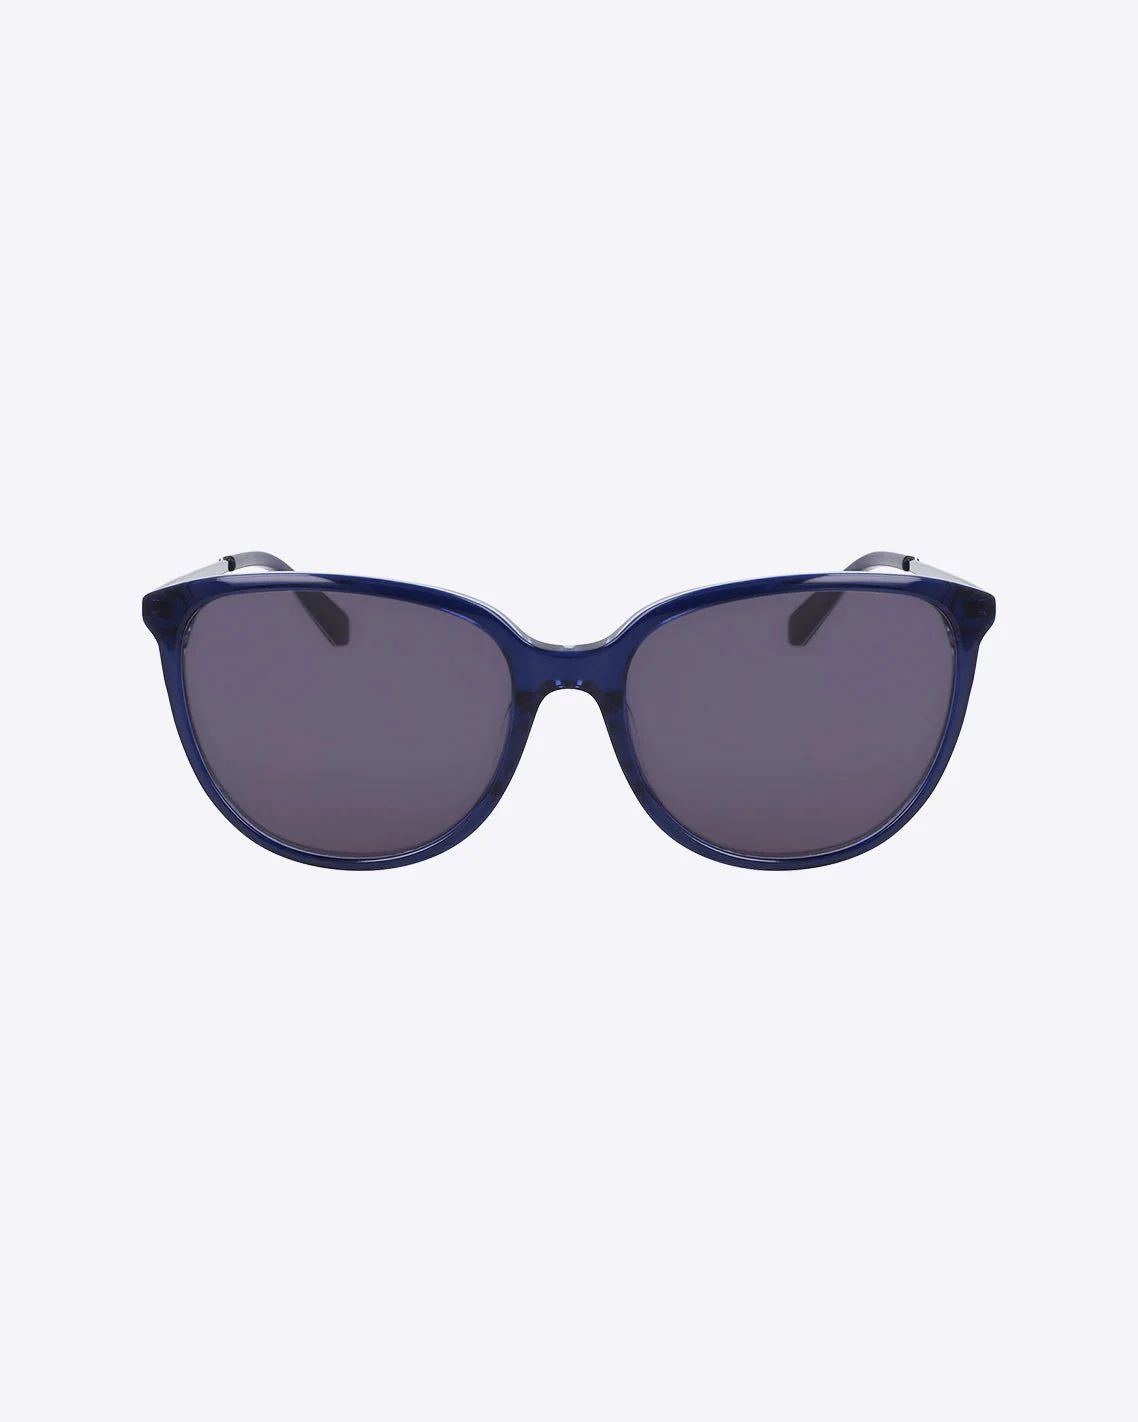 Hattie Sunglasses in Blue | Draper James (US)